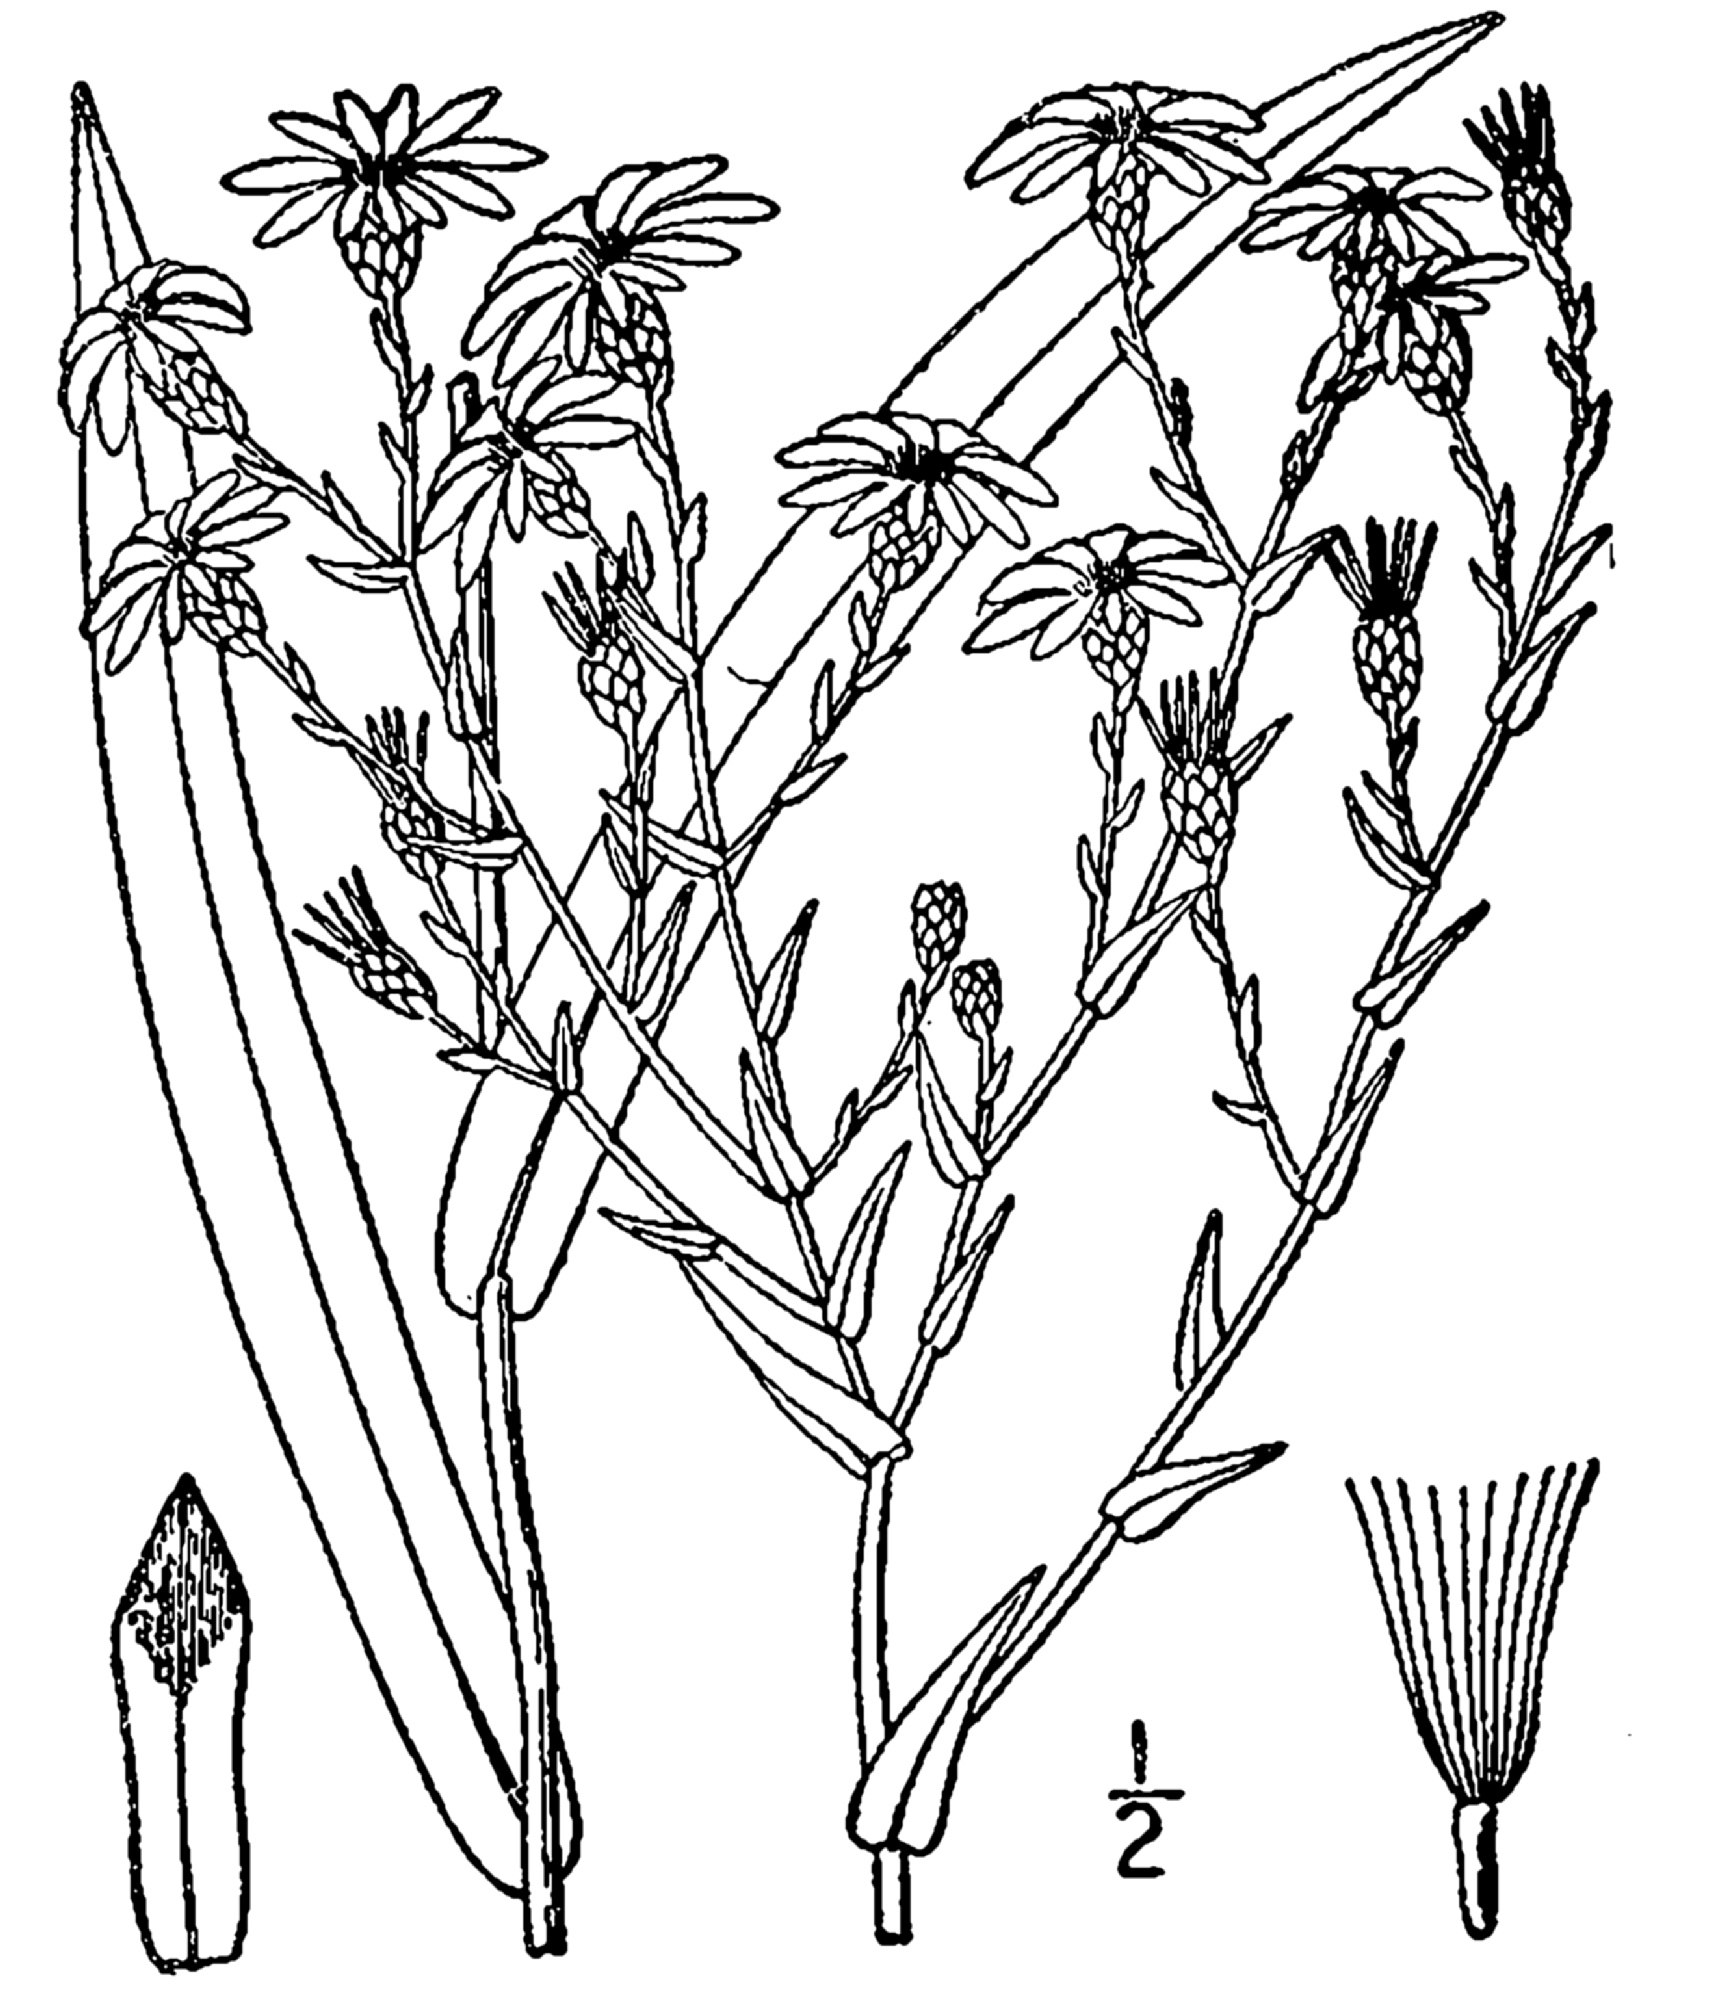 1913 illustration of Heath Aster (Symphyotrichum ericoides).